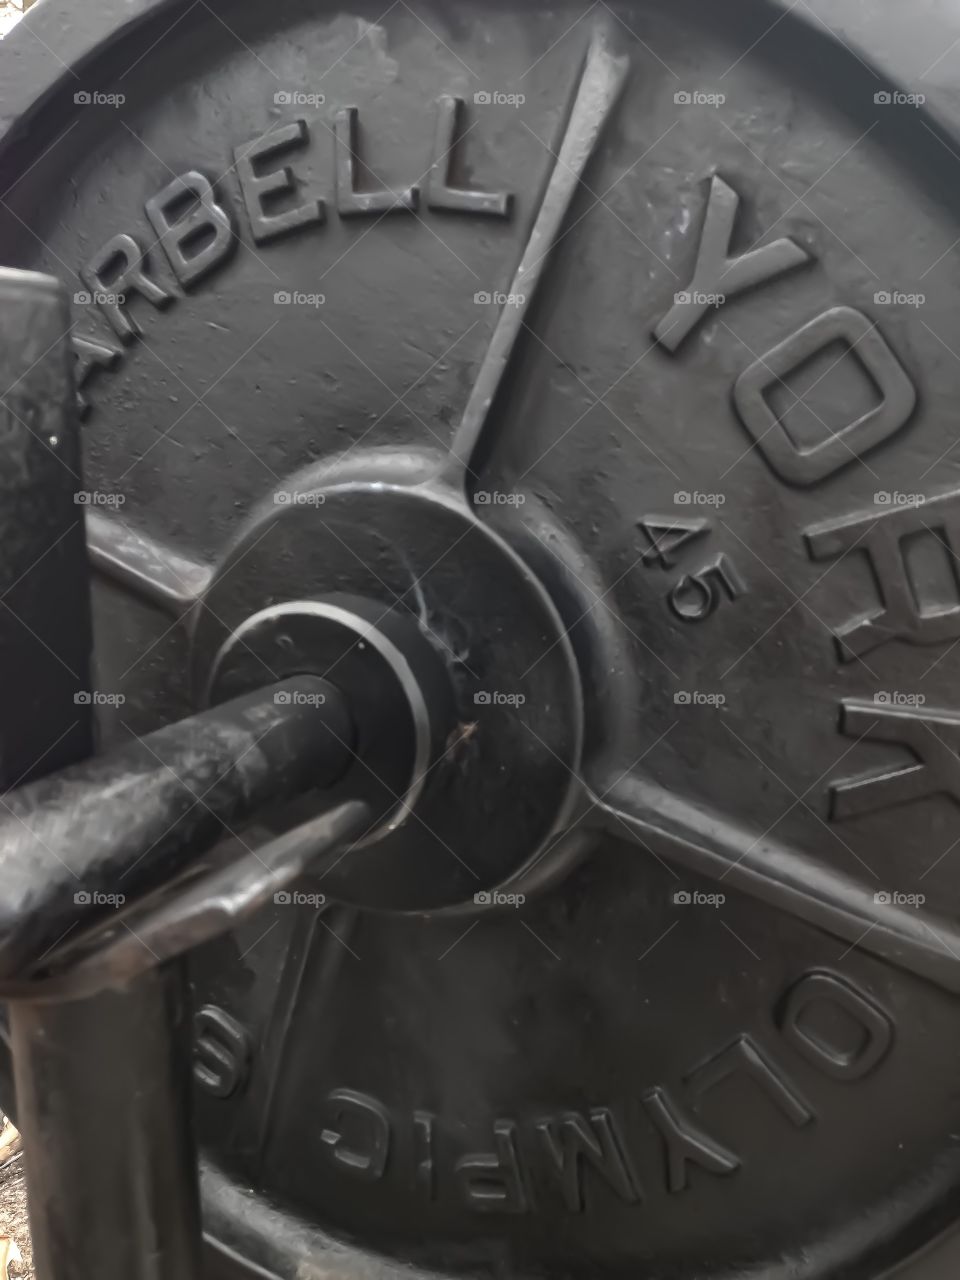 Closeup of an Olympic standard barbell weight. 